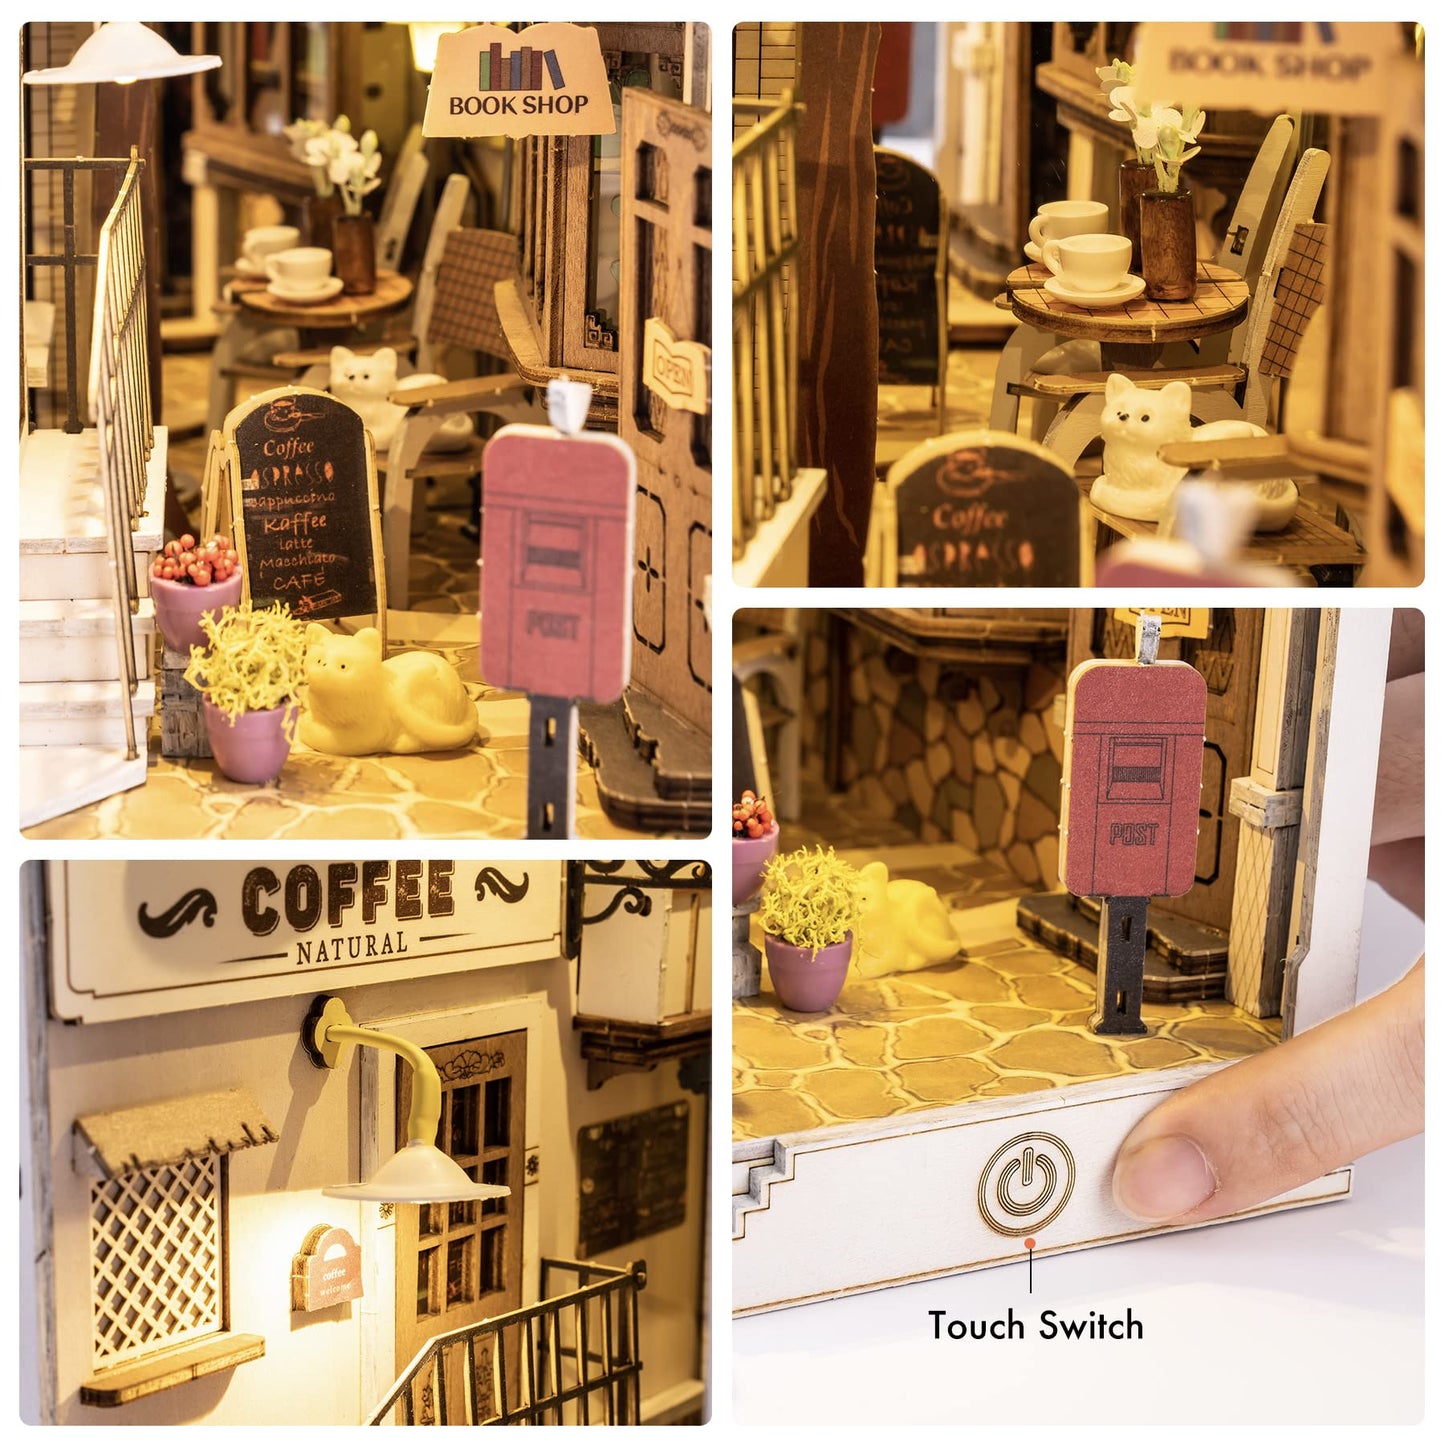 ROBOTIME DIY Book Nook Kit Bookend Stand Bookshelf Insert Bookcase Miniature House with Sensor Light 3D Wooden Puzzle Model Building (Sunshine Town)